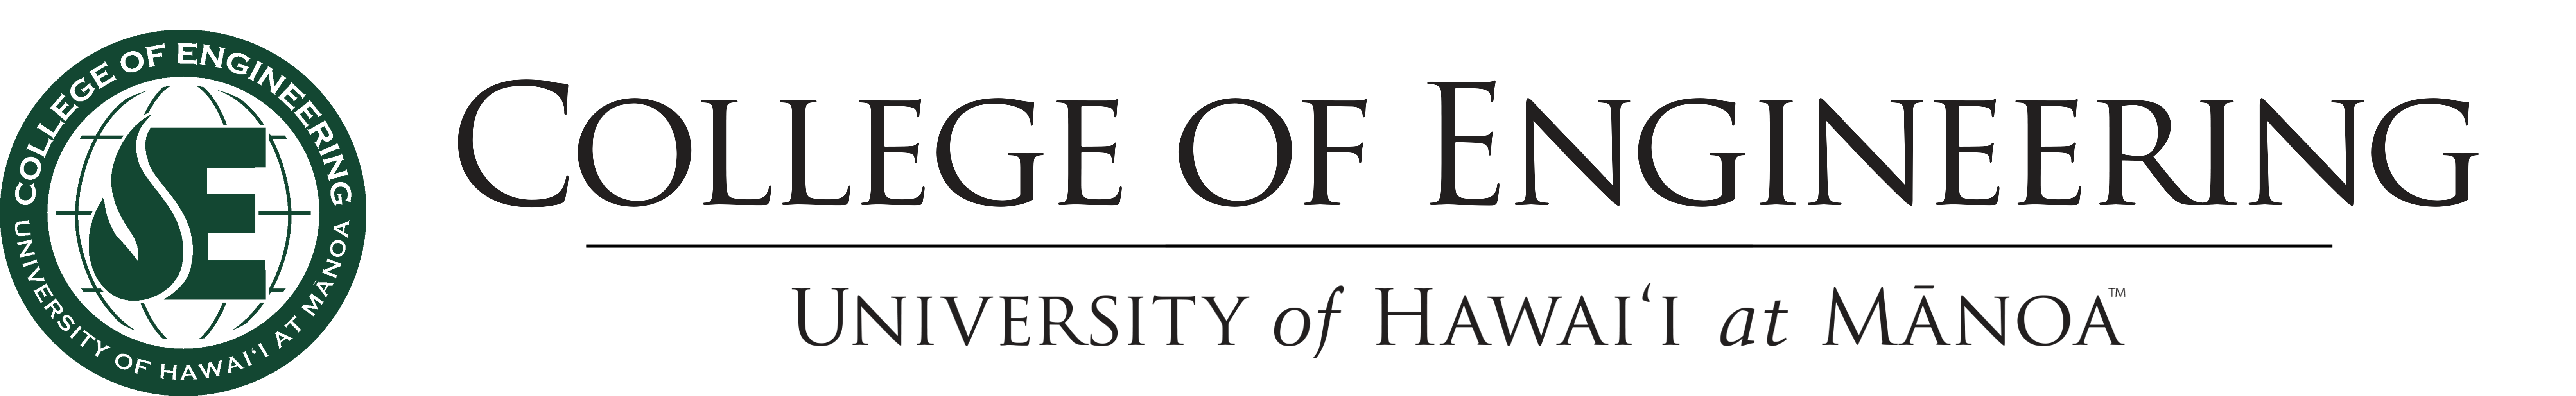 University of Hawai'i College of Engineering